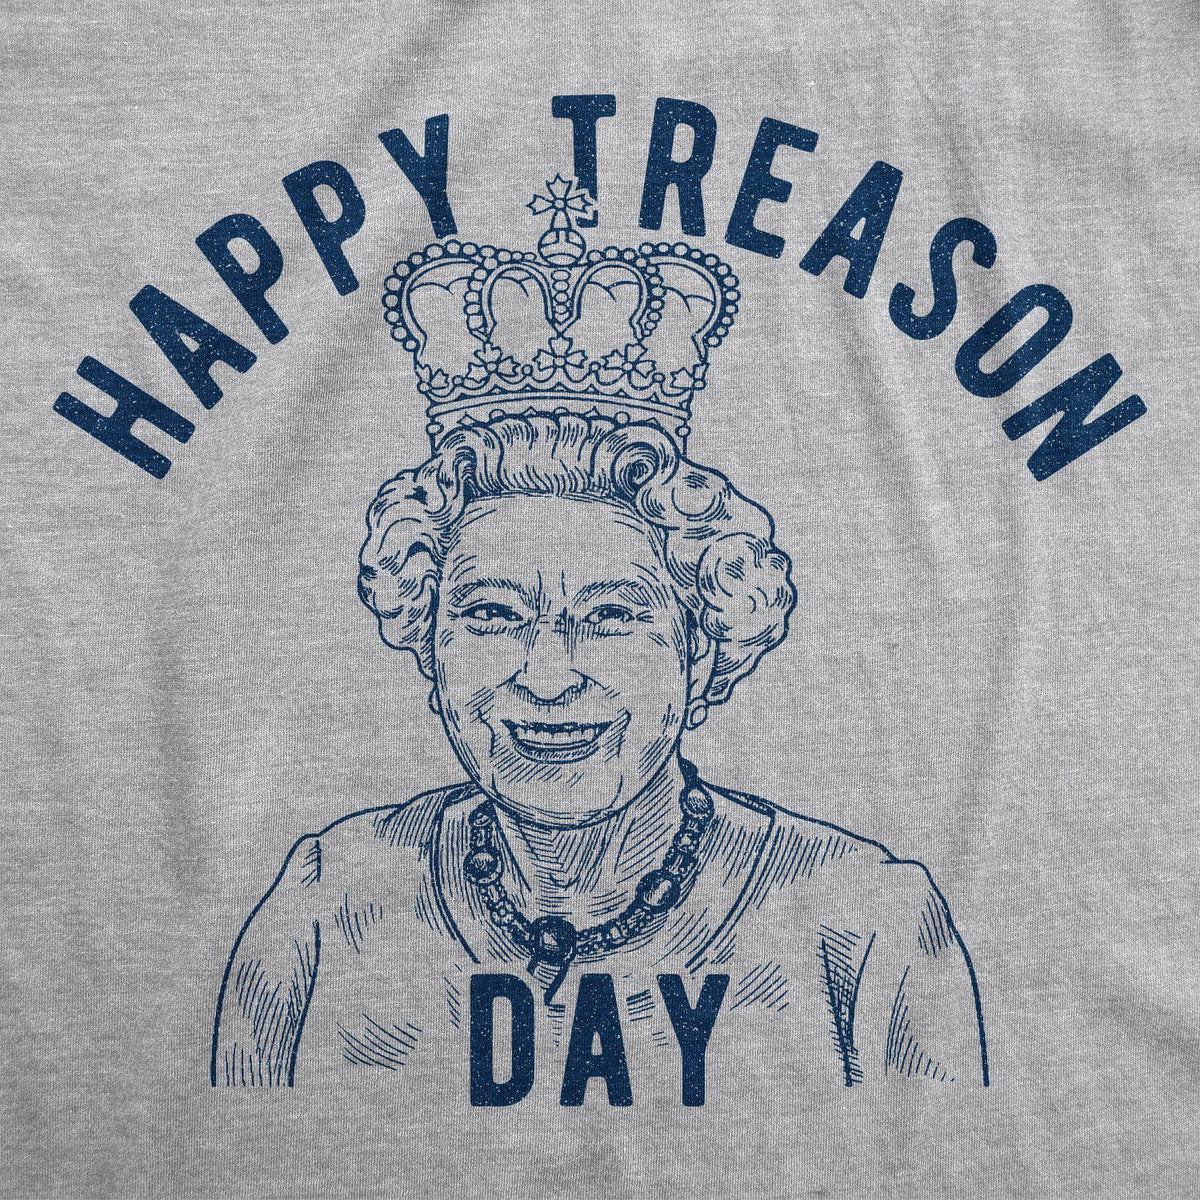 Happy Treason Day Men&#39;s Tshirt - Crazy Dog T-Shirts